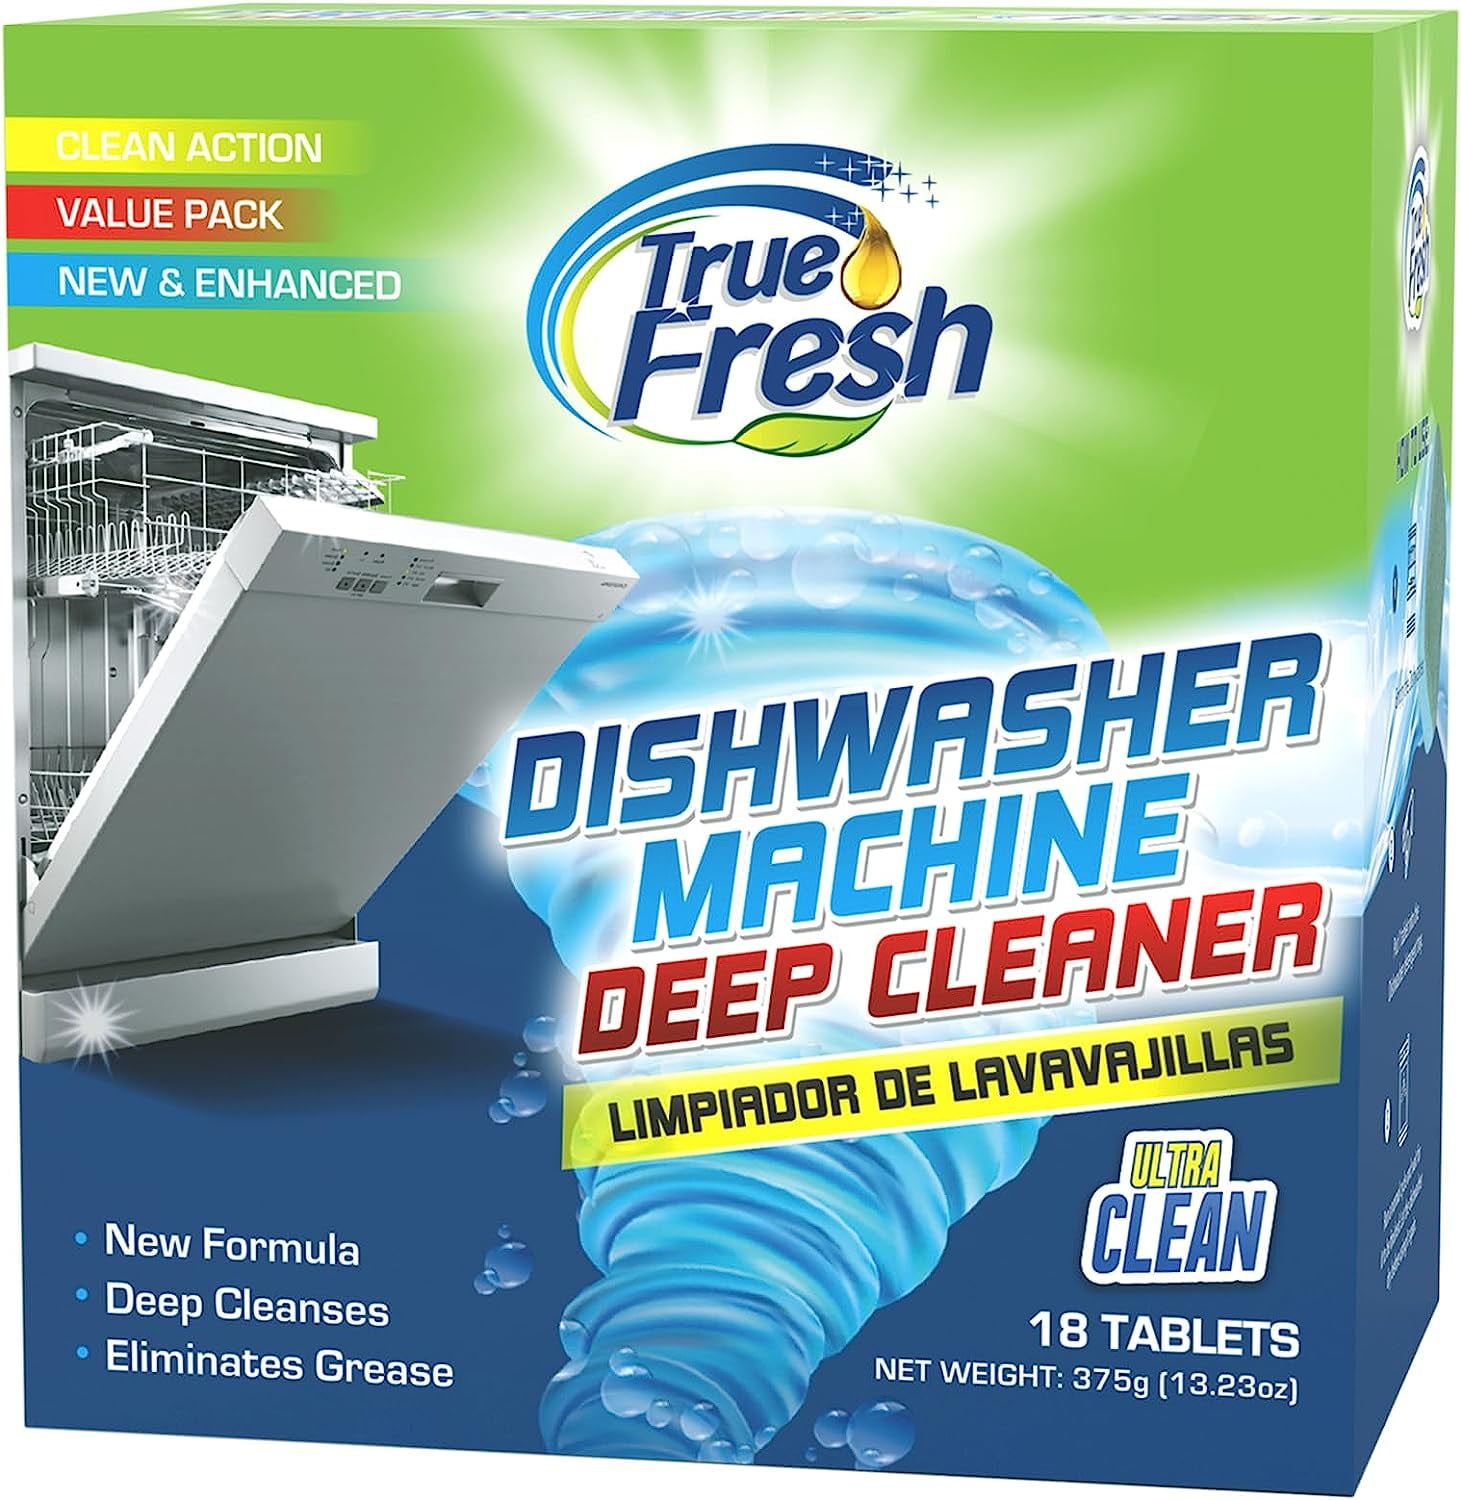 Finish Quantum Ultimate Clean & Shine Dishwasher Detergent Tablets : Target